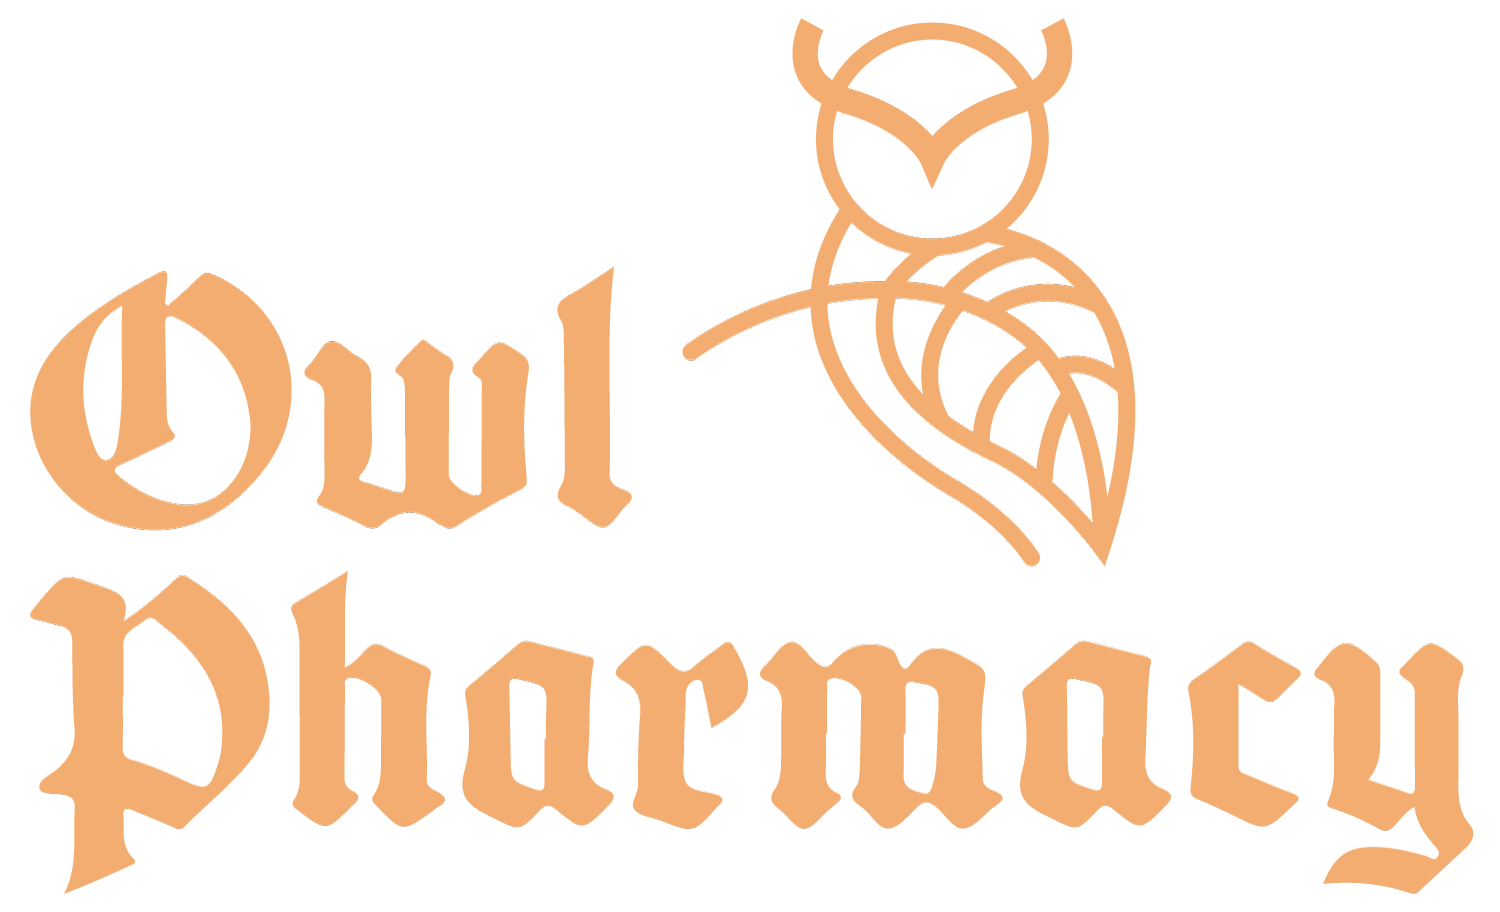 Owl Pharmacy